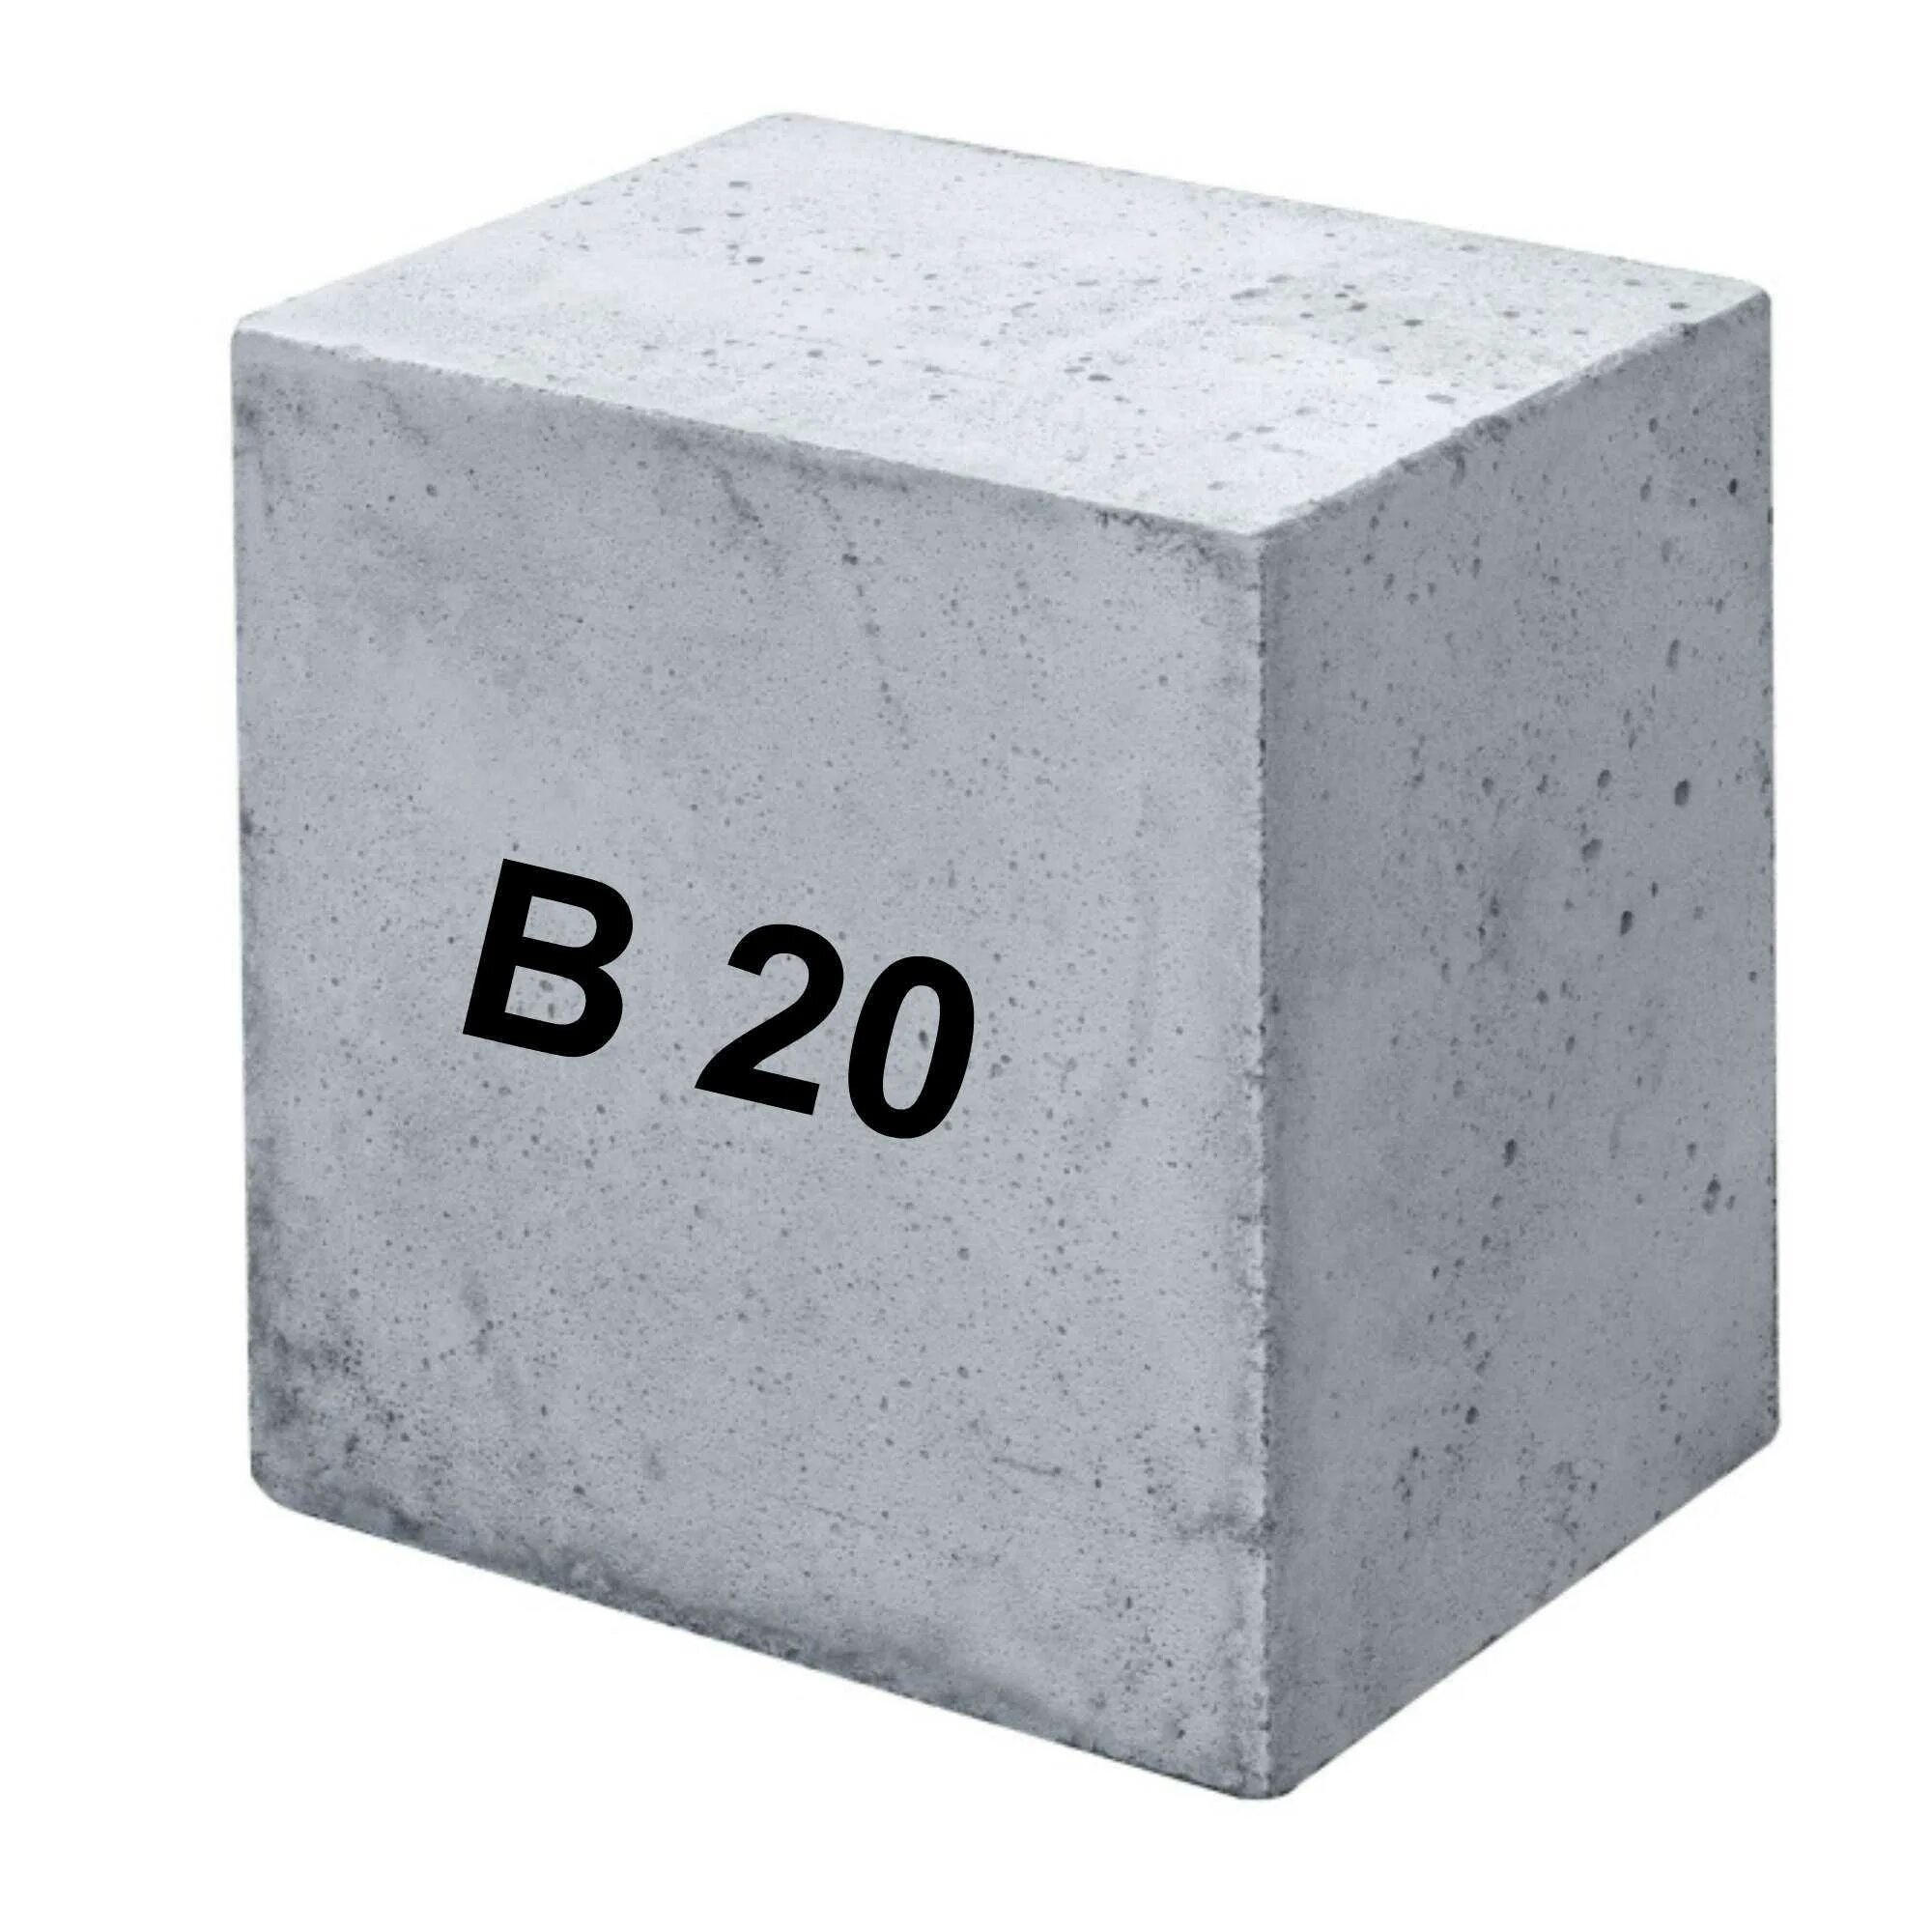 Купить 1 куб бетона. Бетон b20 w4 f73. B30 b35 бетон. Бетон м20 мелкозернистый. Бетон товарный м200 (куб.метр).